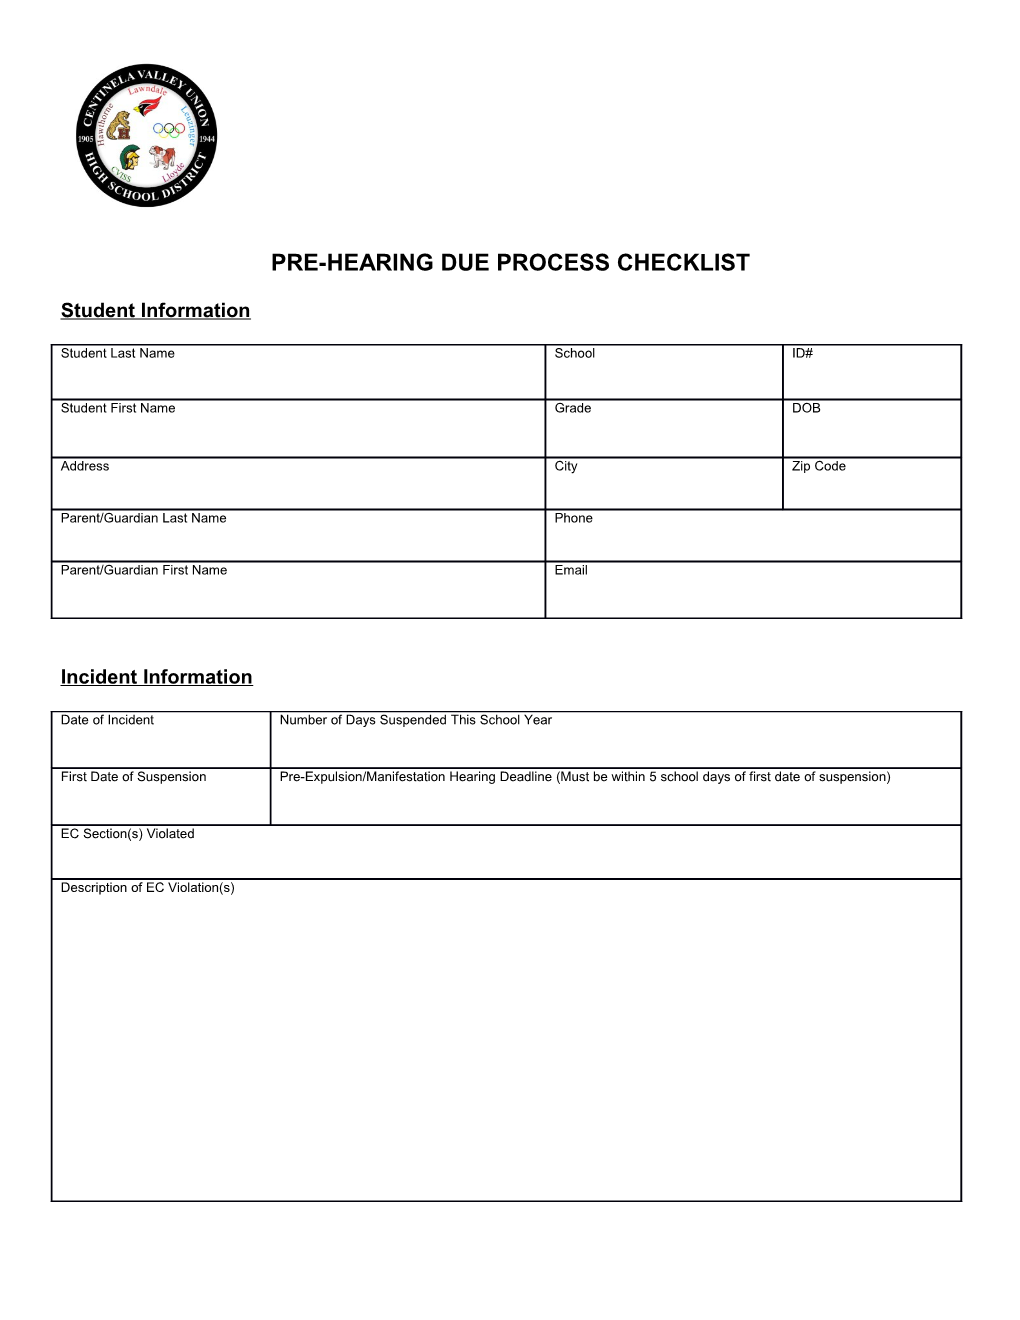 Pre-Hearing Due Process Checklist